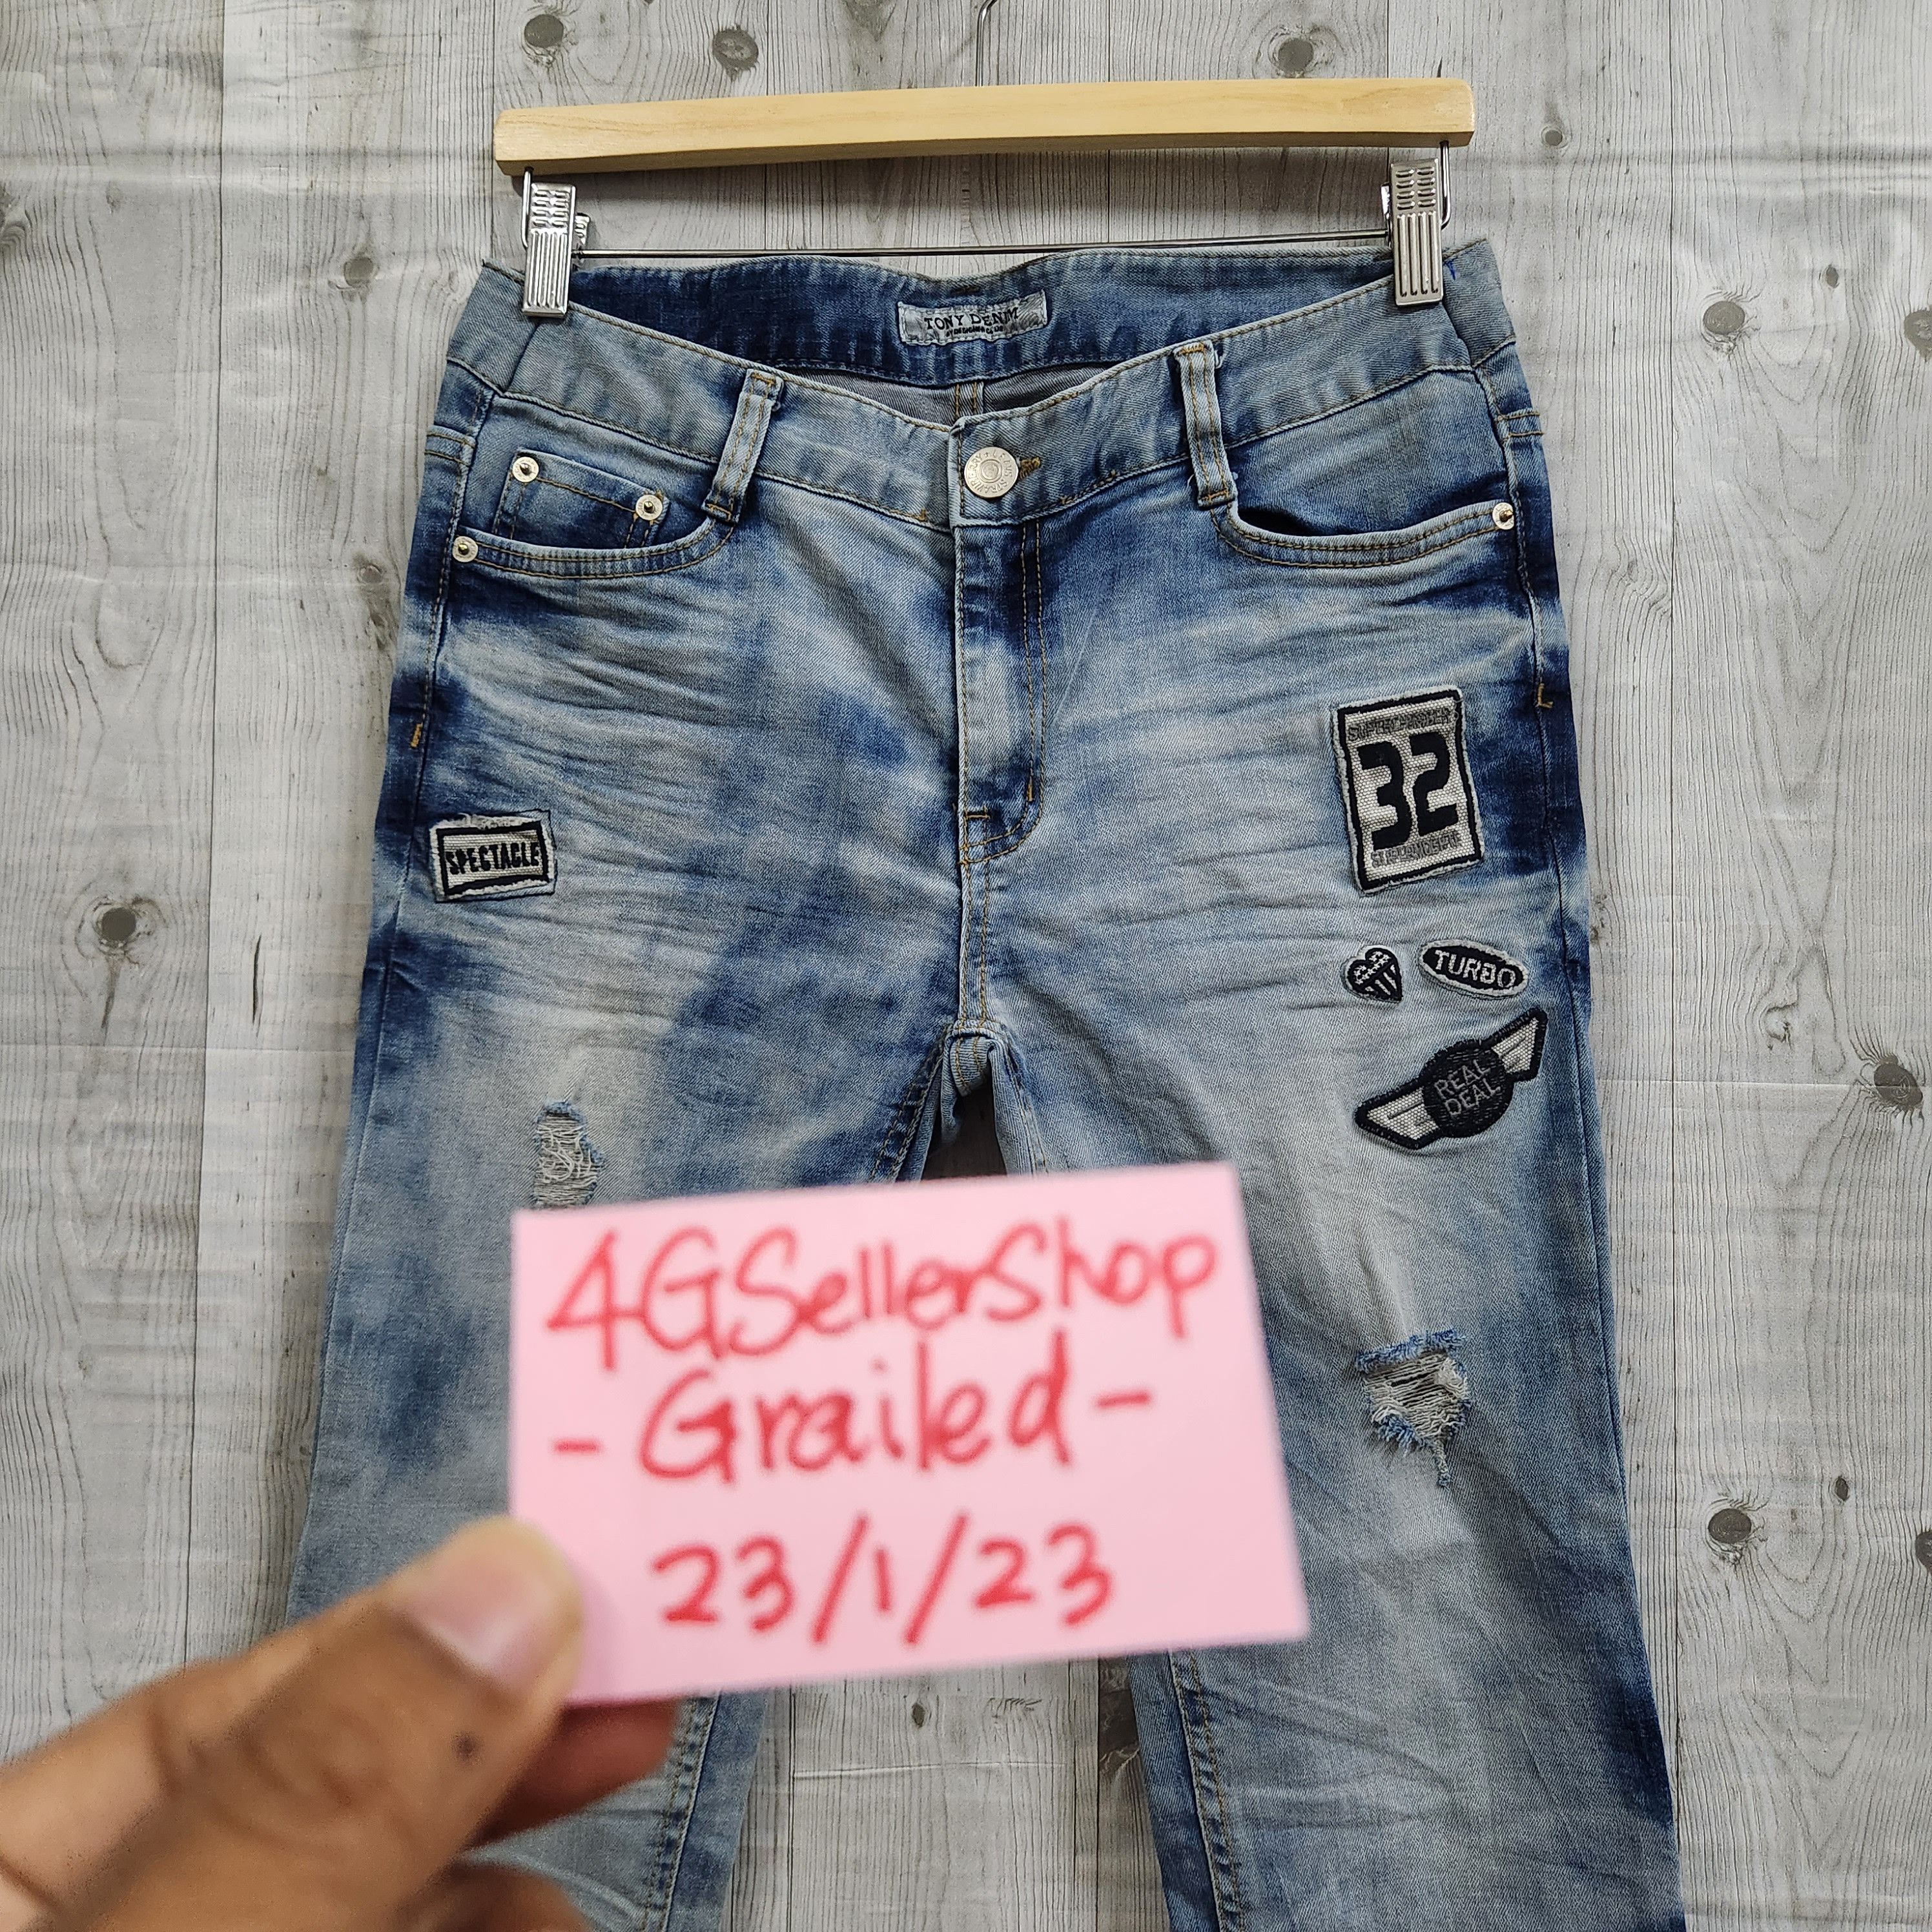 Tony Distressed Denim Japan Acid Washed Jeans - 19